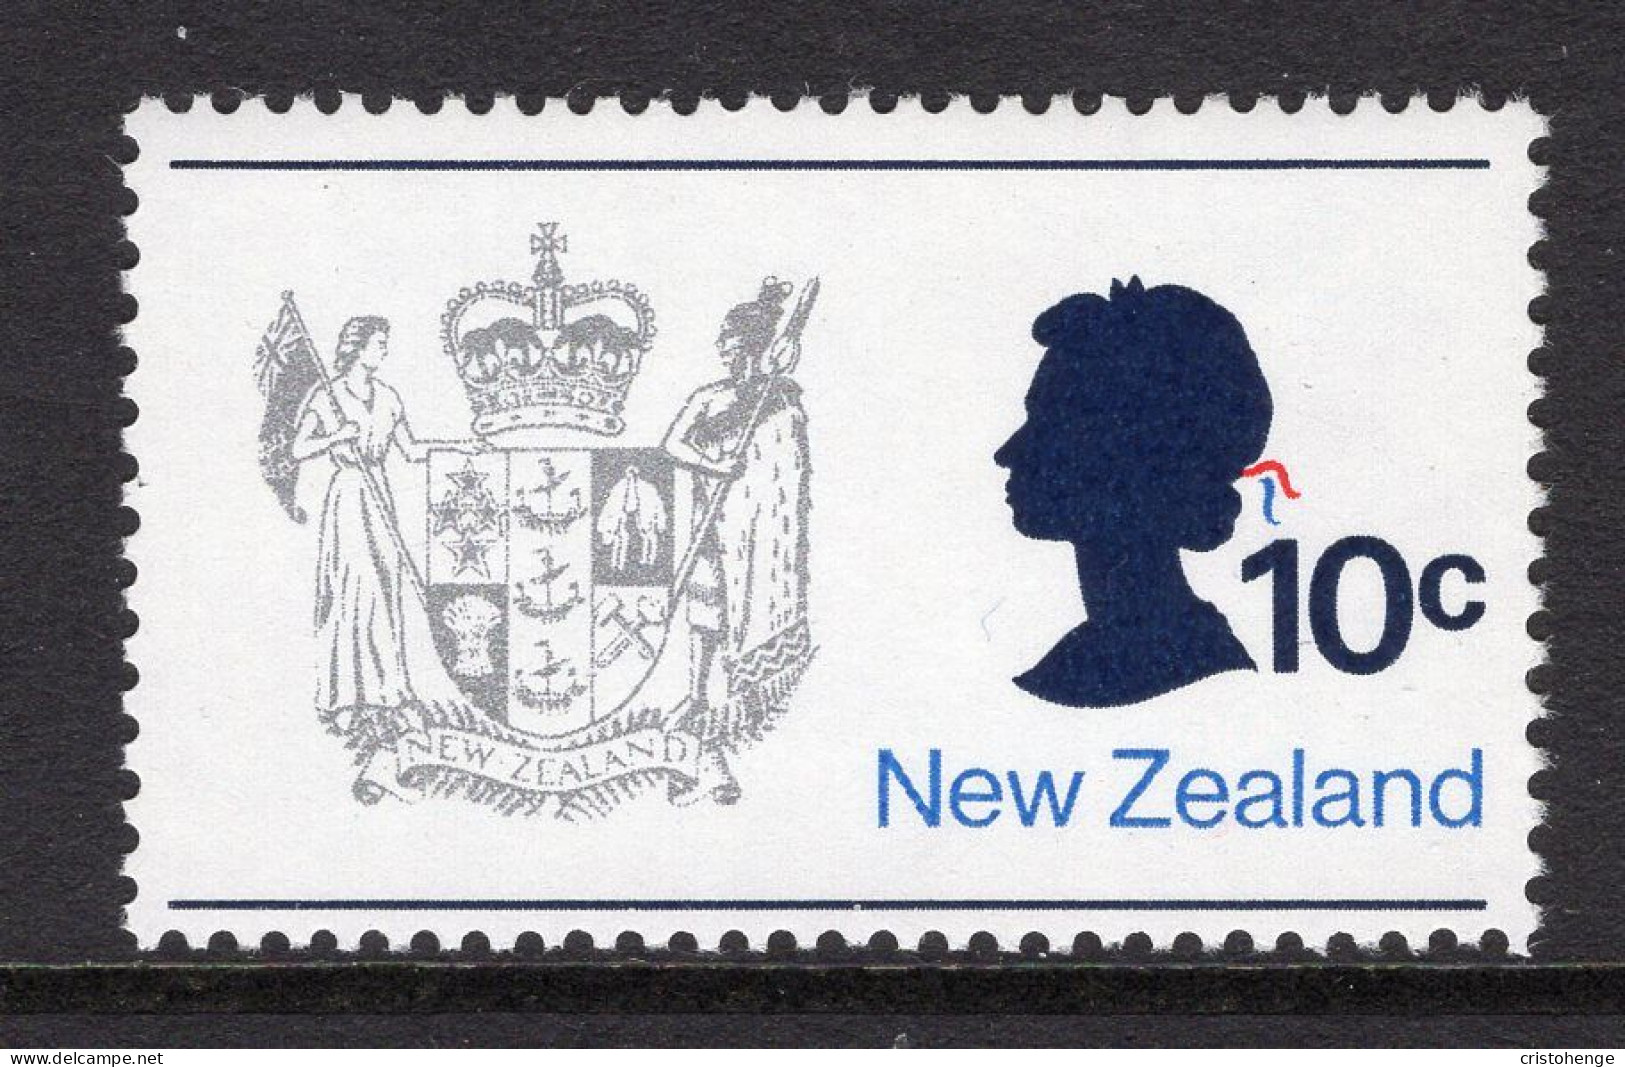 New Zealand 1973-76 Definitives - No Wmk. - 10c QEII & Arms MNH (SG 1016) - Neufs